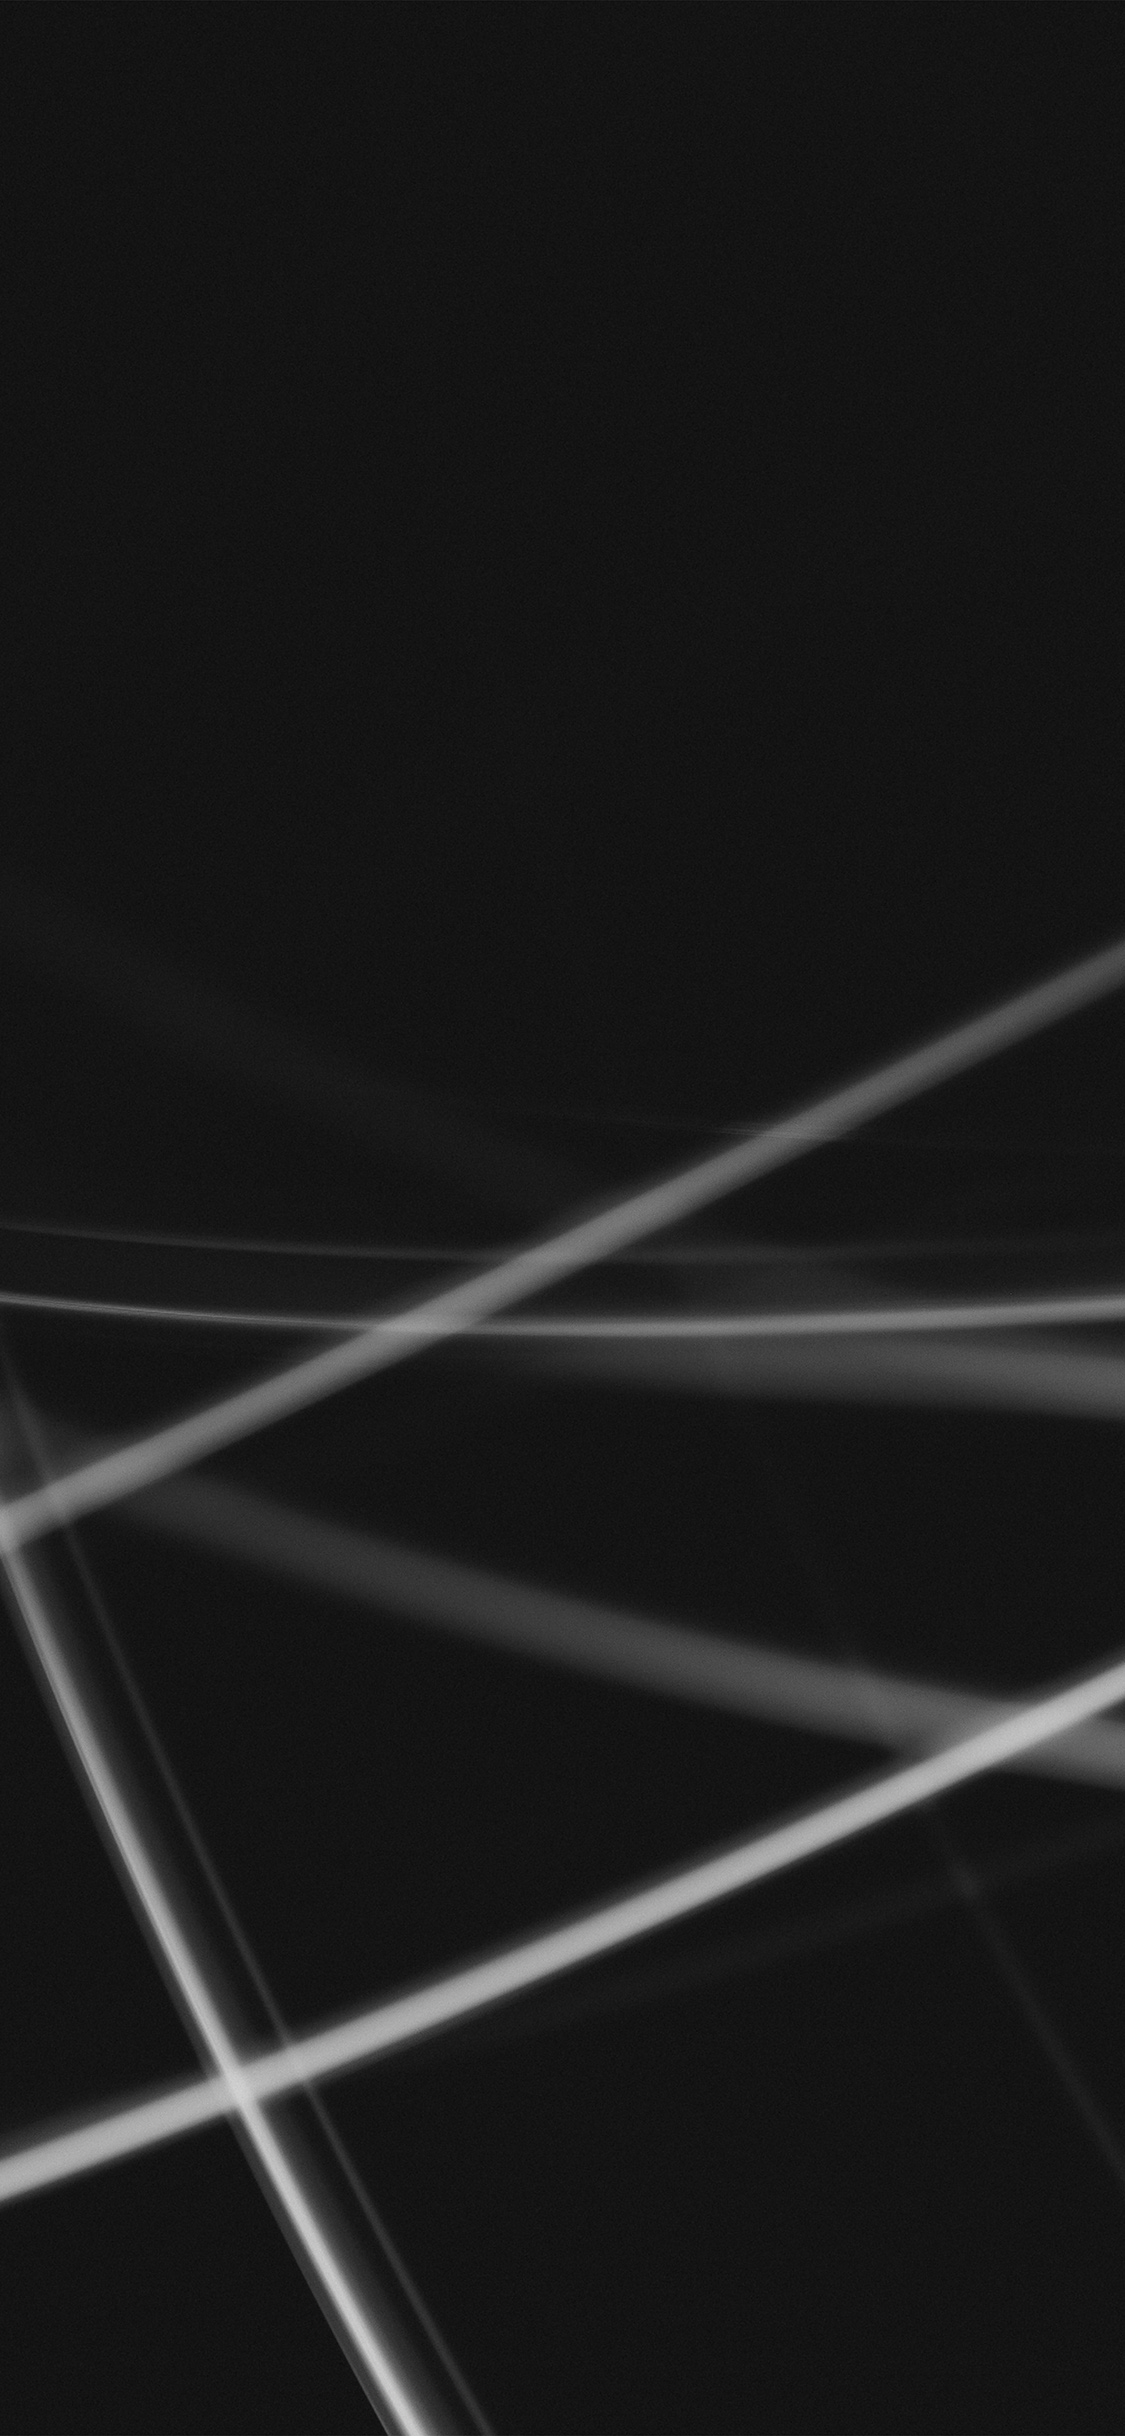 iPhone X wallpaper. dark line abstract pattern bw